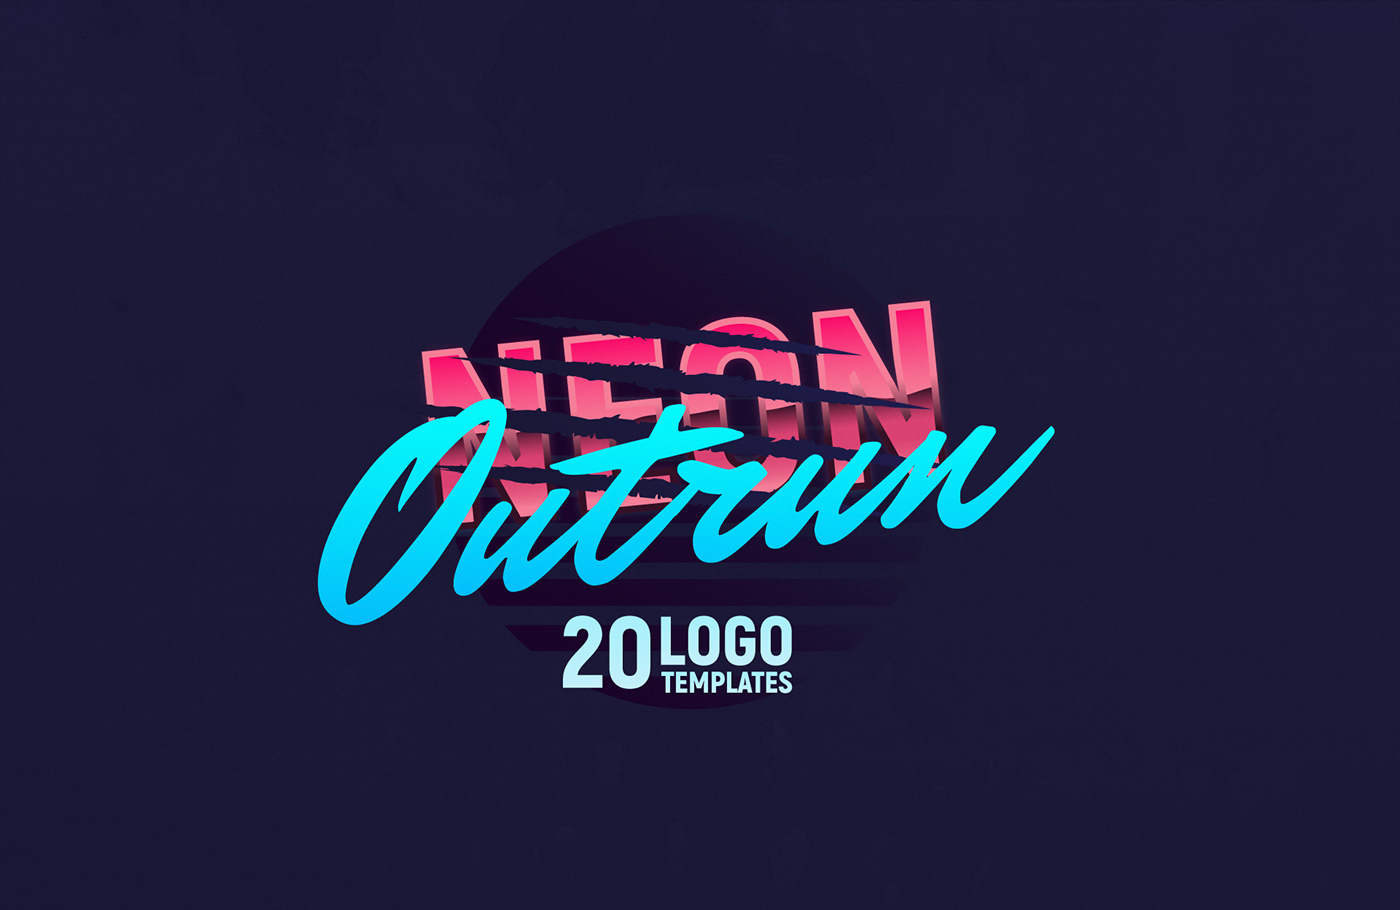 80s free logo neon Outrun Retro retrowave vaporwave freebies vintage